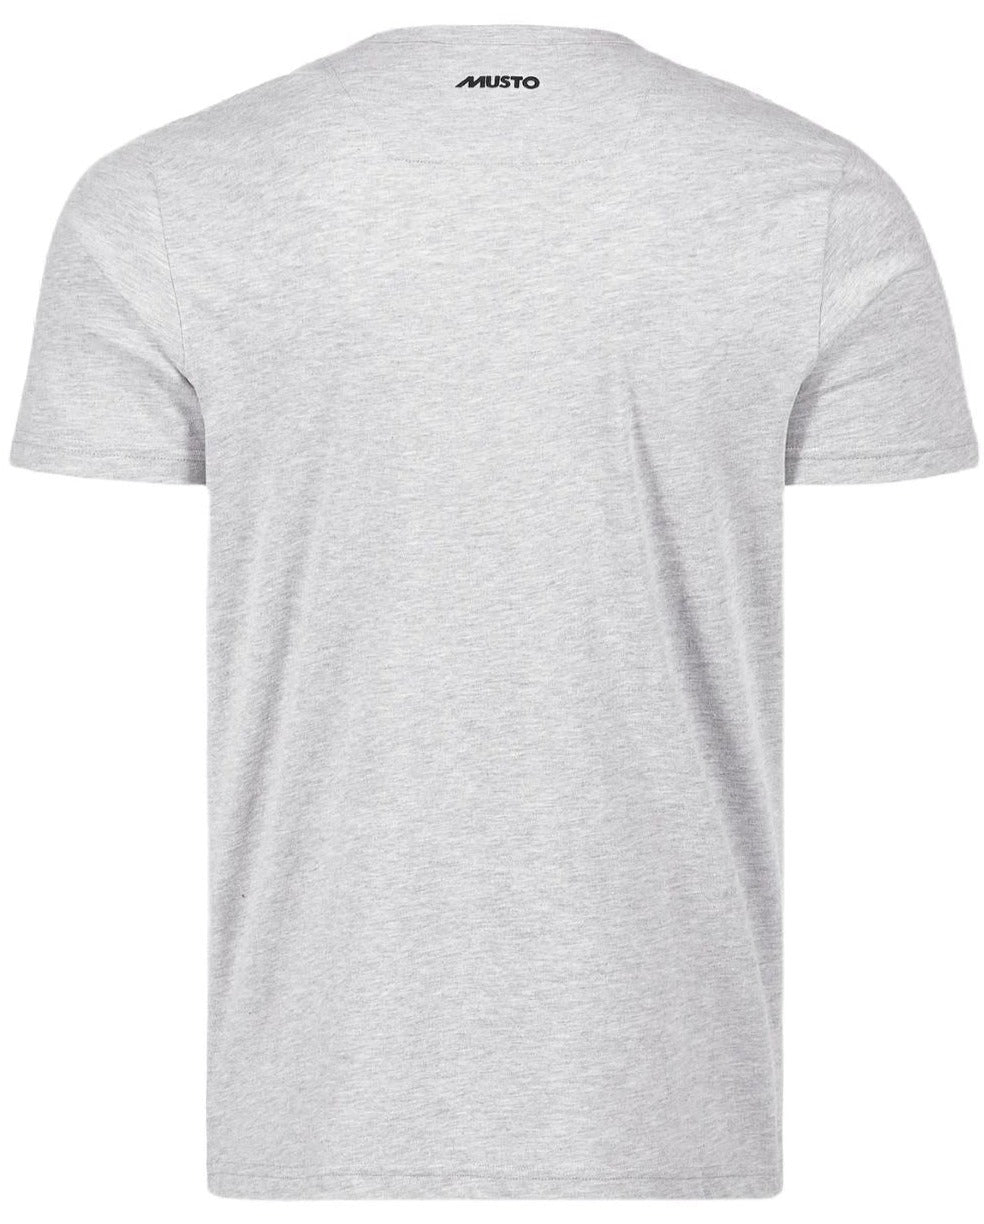 Musto Mens Essentials T-Shirt in Grey Melange